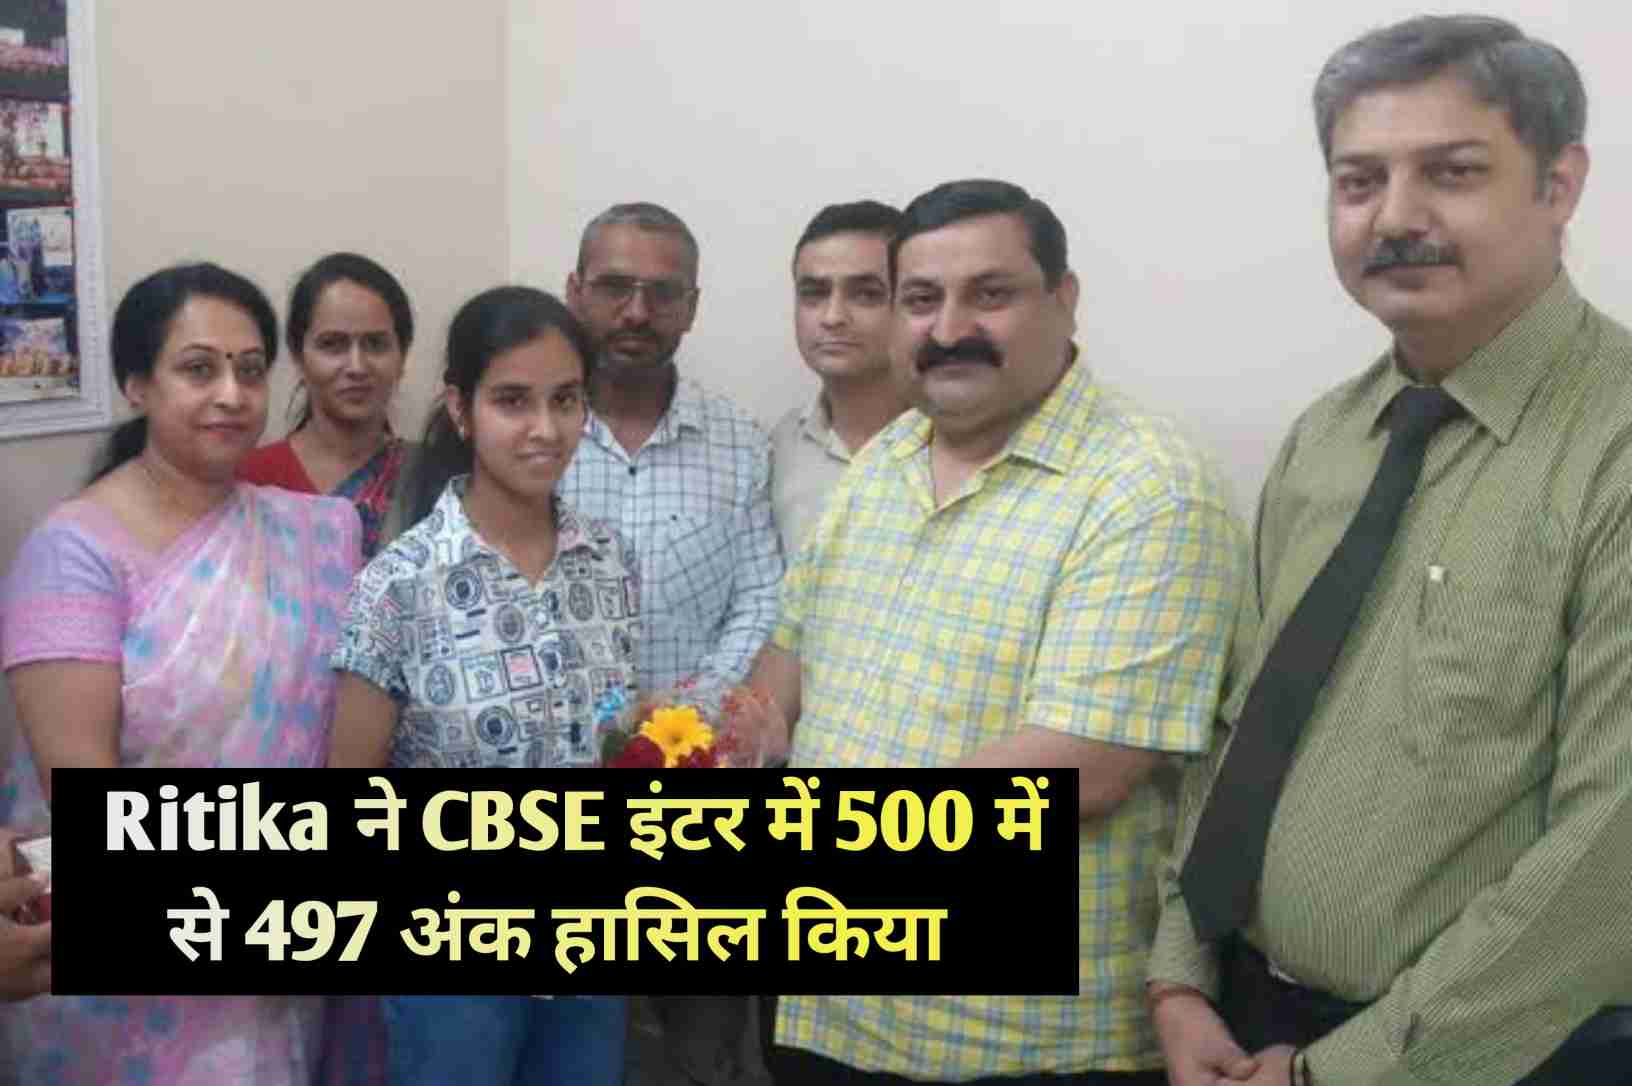 Ritika Chaudhary, student of DS Public School in Muzaffarnagar, topped CBSE Inter